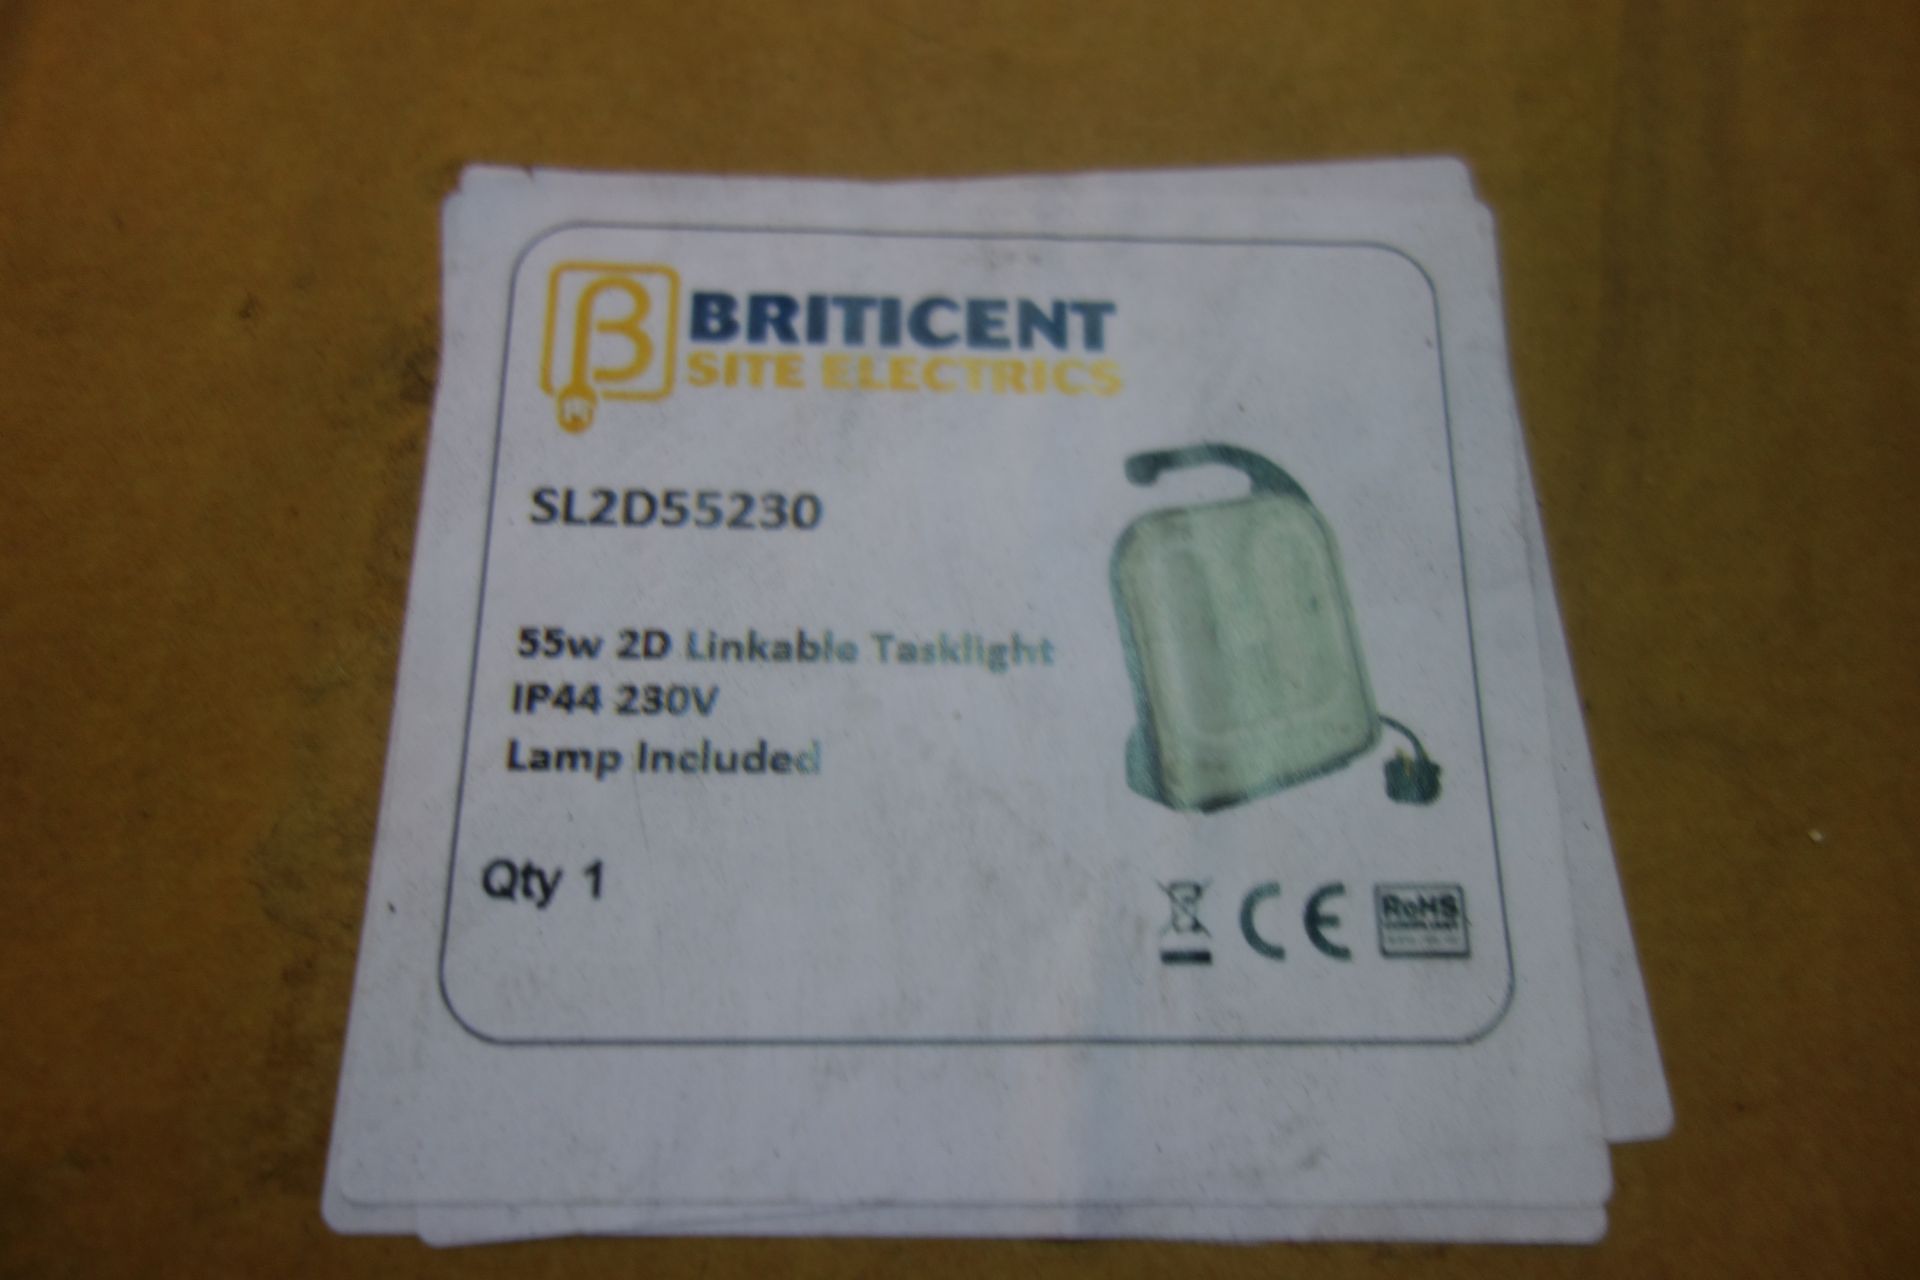 8 X Briticent SL2D55230 55W 2D Linkable Tasklight 1P44 230V Lamp INC: